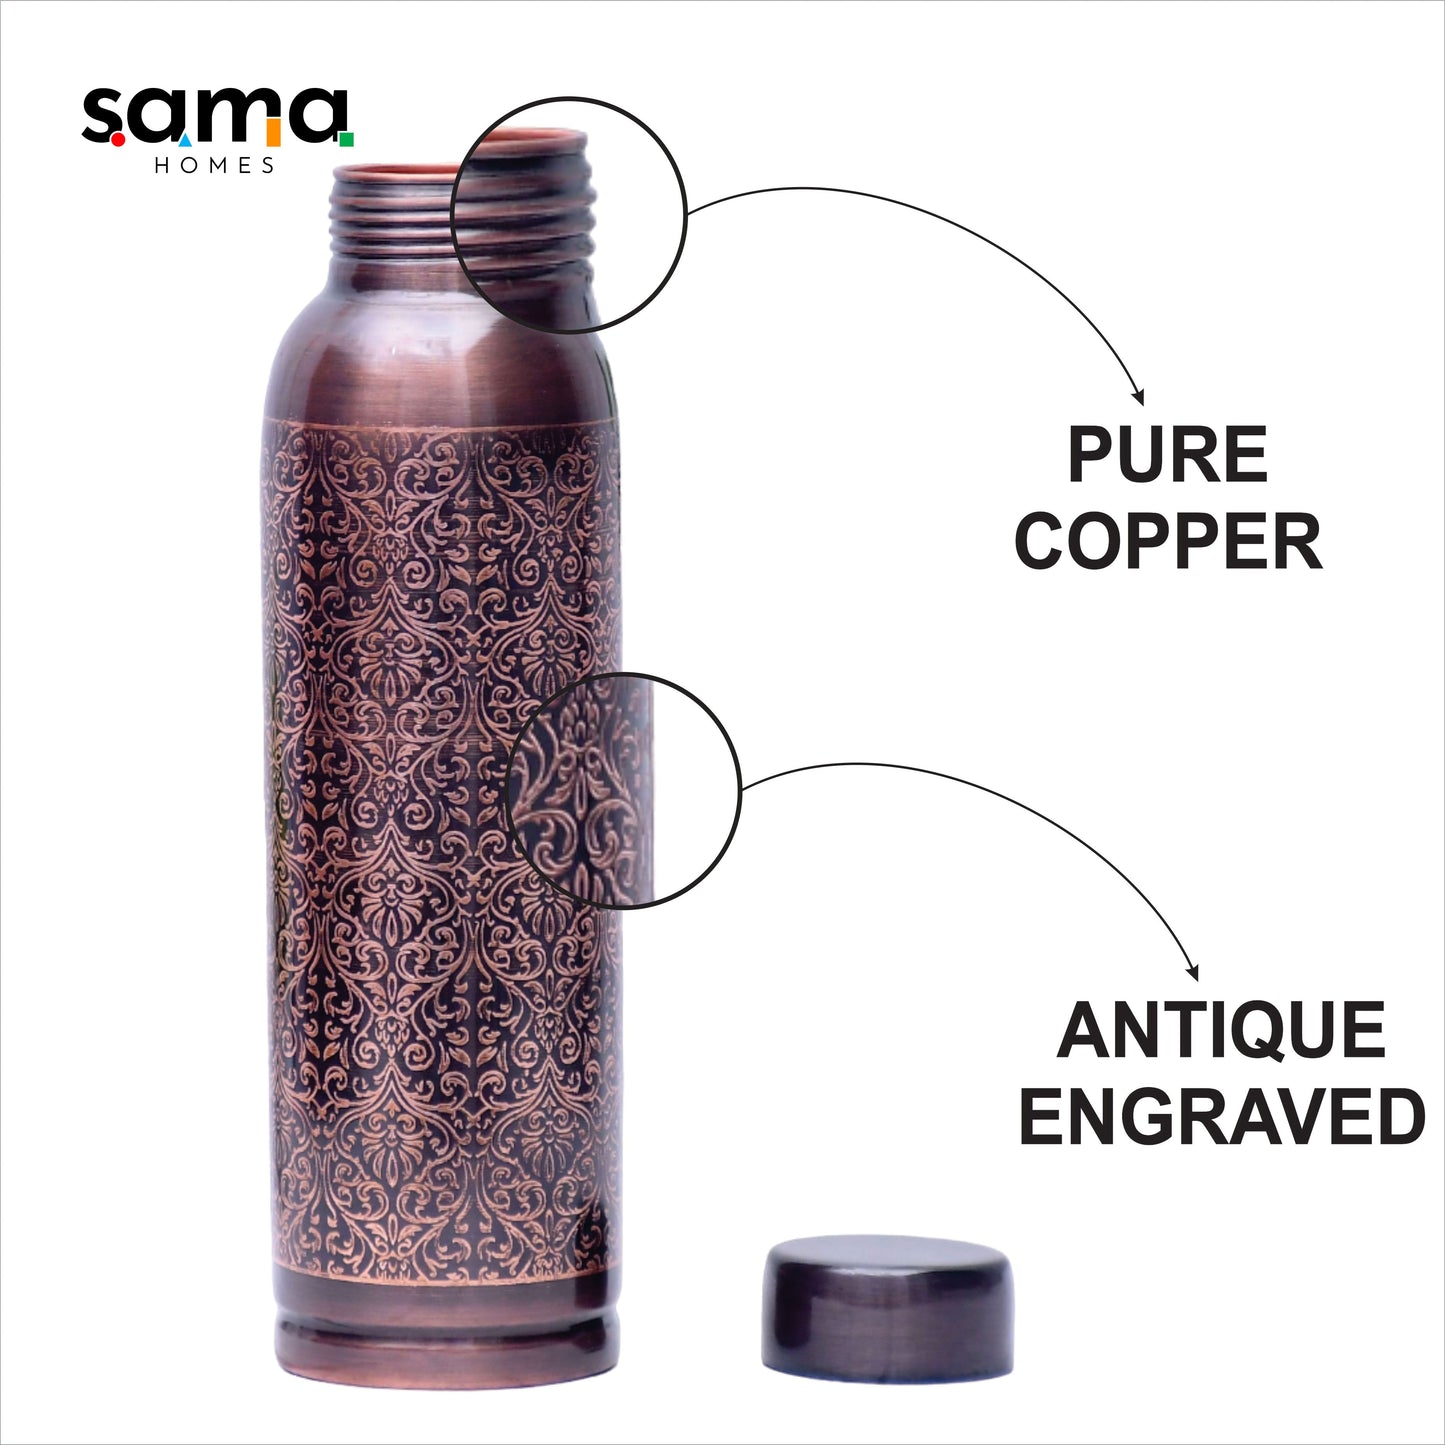 SAMA Homes - pure copper water bottle milton antique engraved design